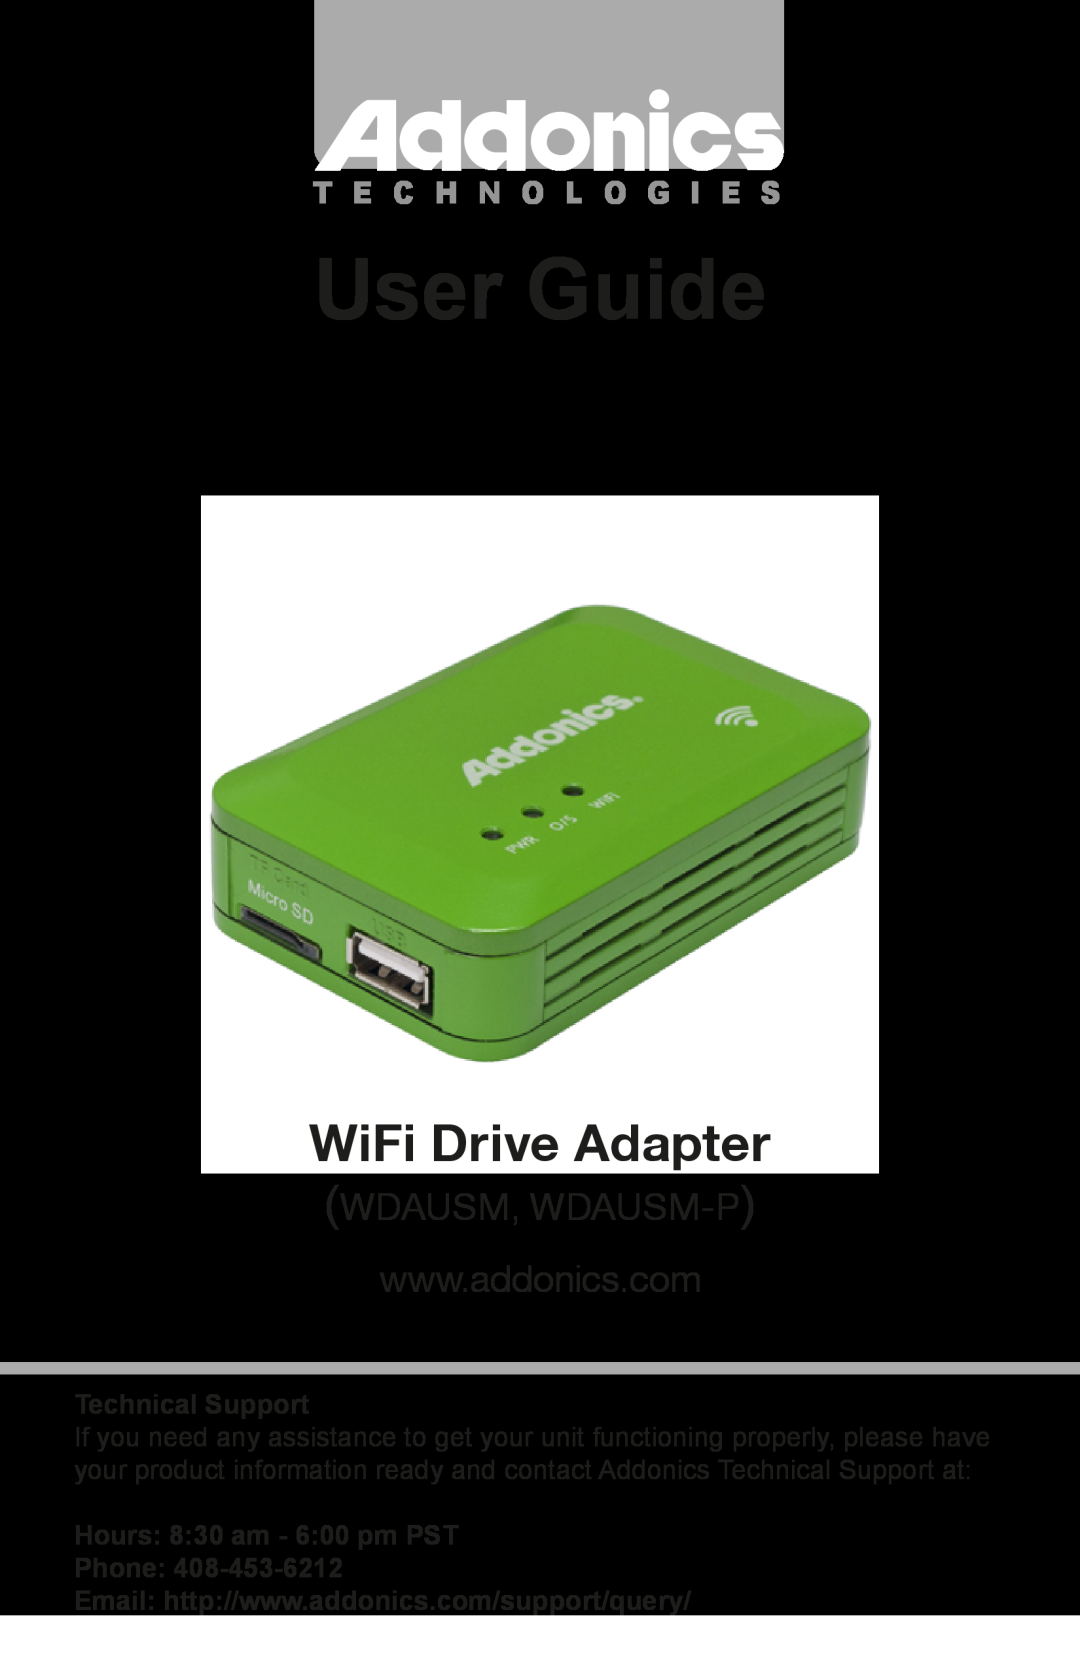 Addonics Technologies WDAUSM-P manual User Guide, WiFi Drive Adapter, Wdausm, Wdausm-P, T E C H N O L O G I E S 